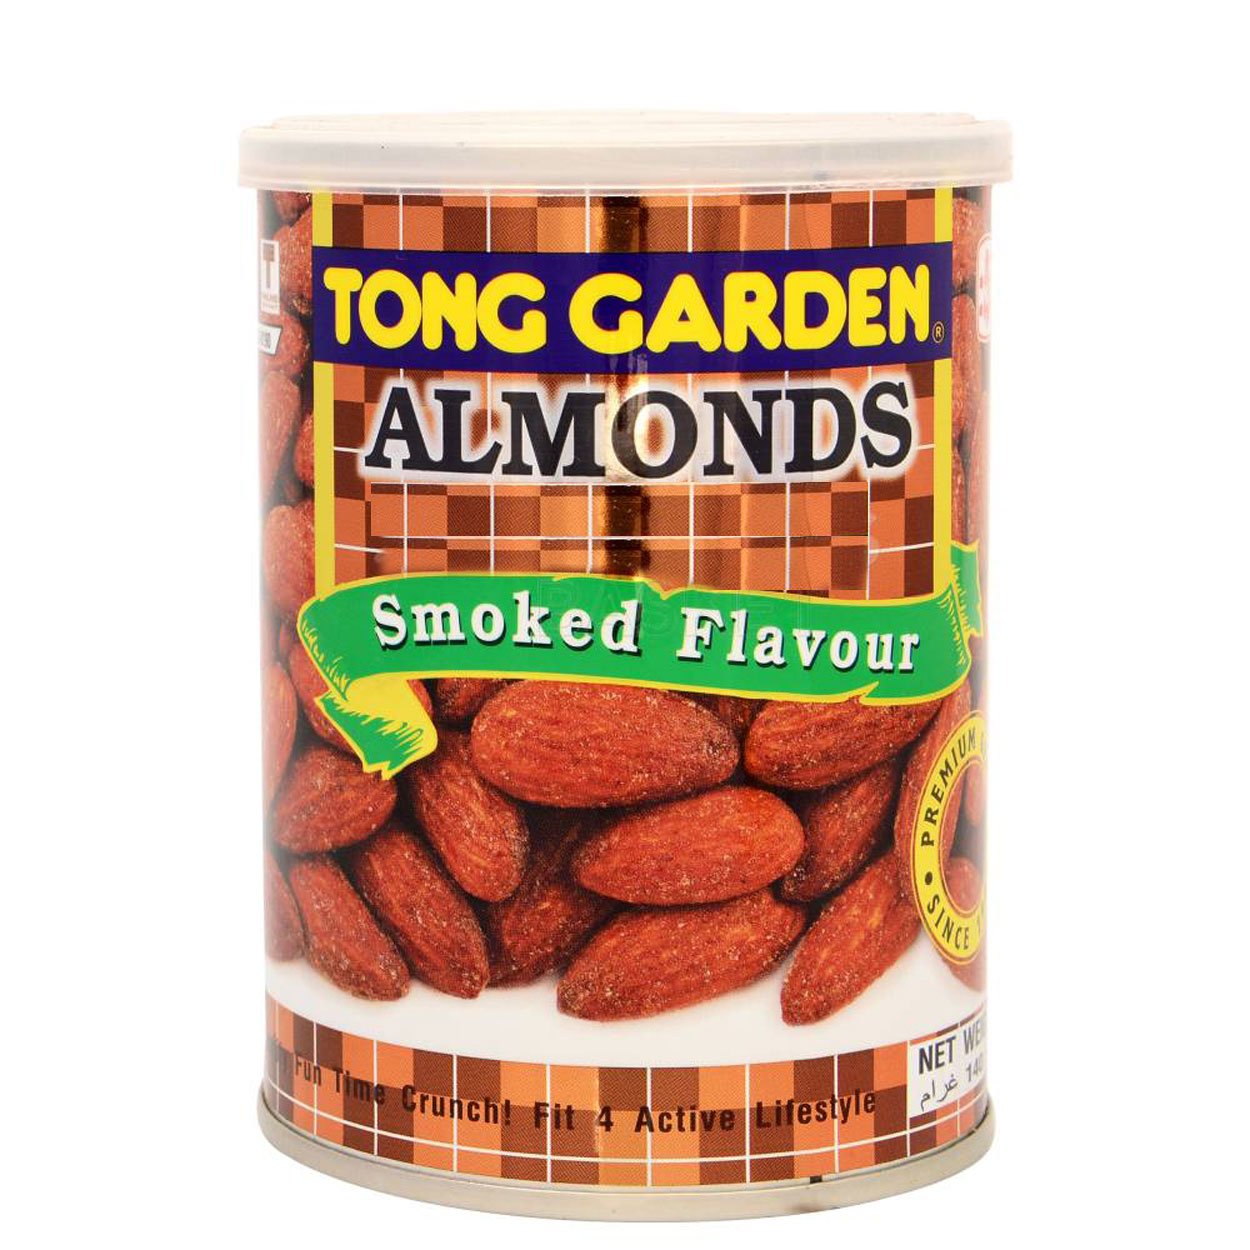 Buy Tong Garden Almonds Smoked Flavour